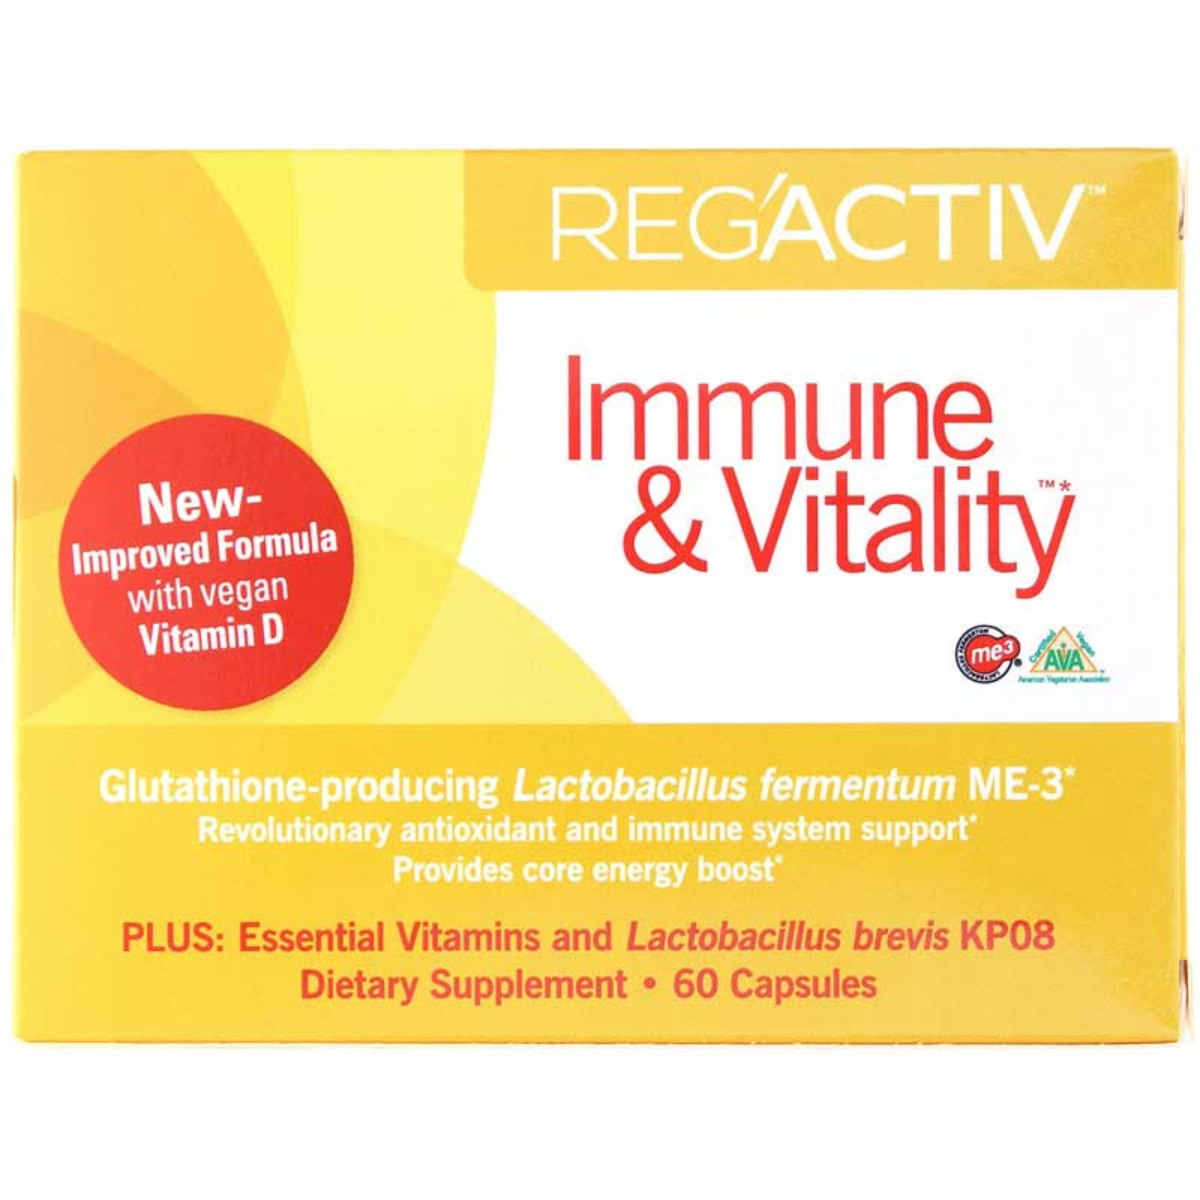 Probiotic, Reg'Activ Immune & Vitality